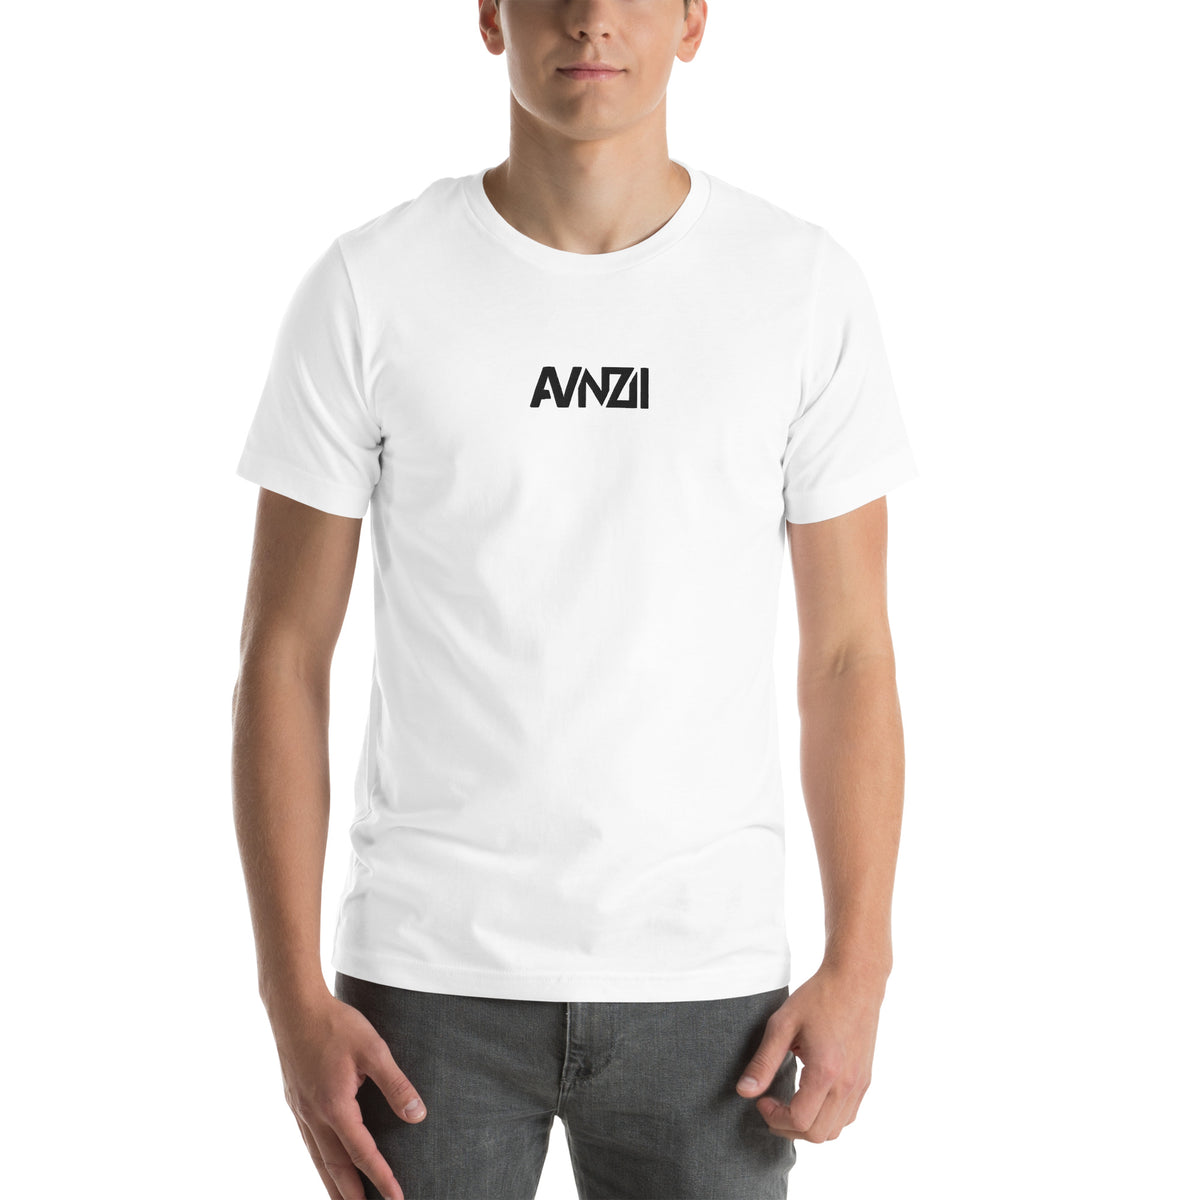 AVNZII - Unisex-T-Shirt mit Stick